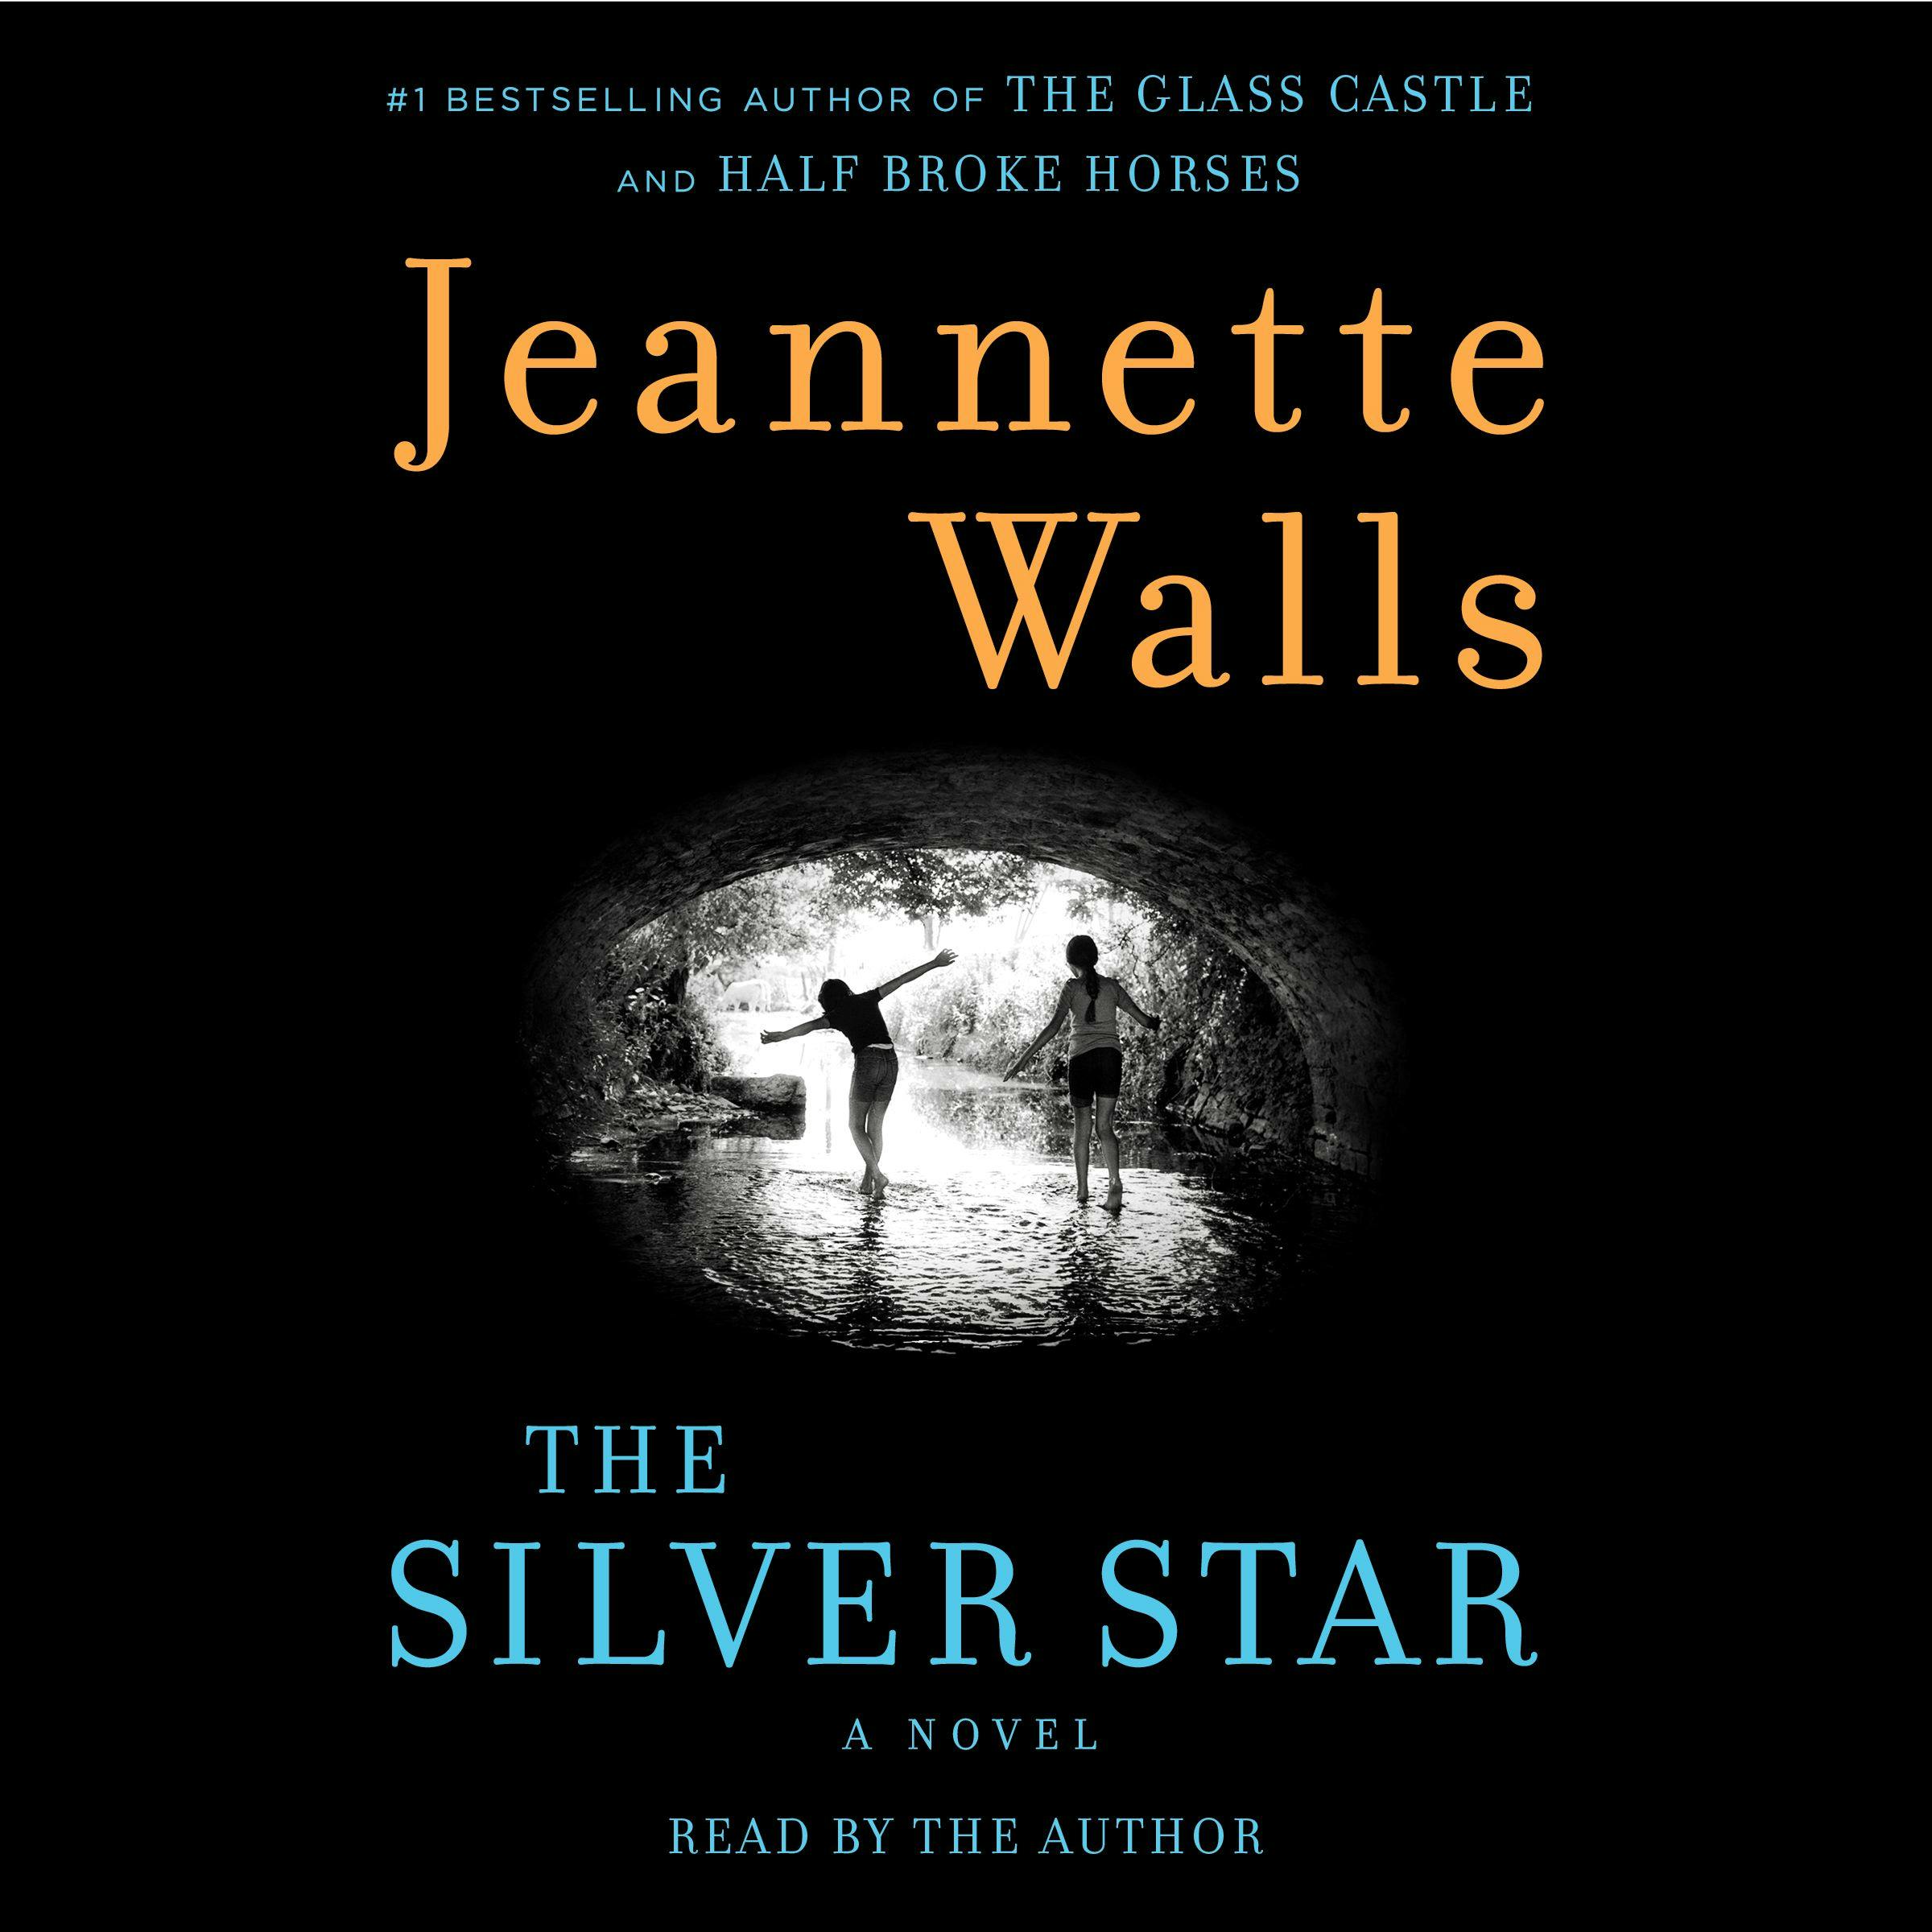 The Silver Star: A Novel - Jeannette Walls